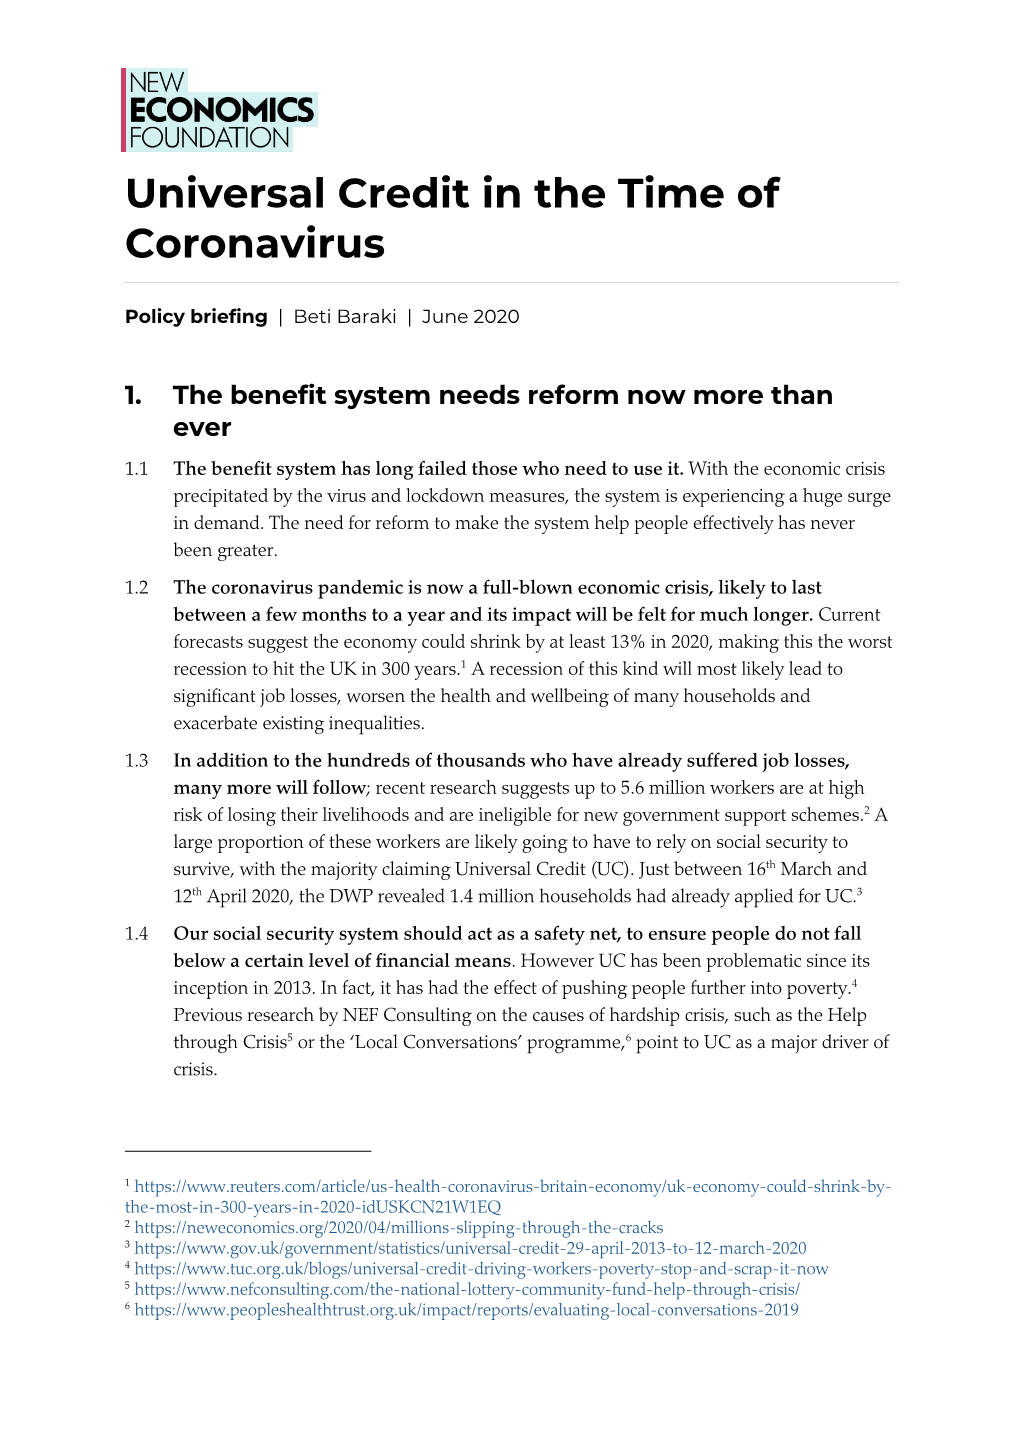 Universal Credit in the Time of Coronavirus